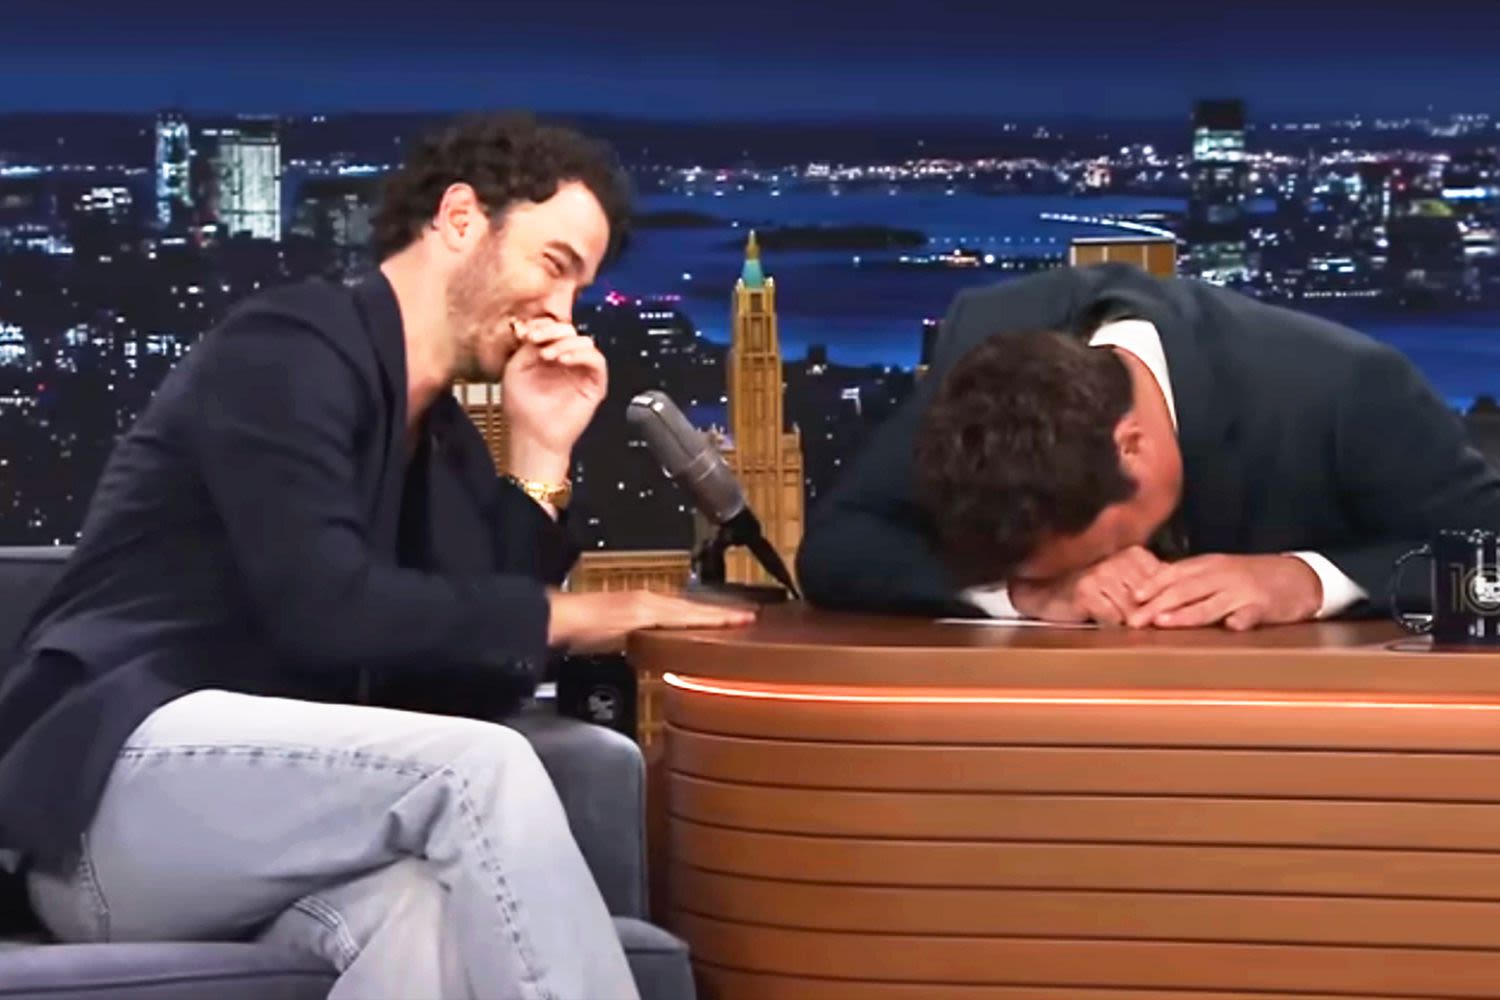 Kevin Jonas addresses viral Jimmy Fallon handshake snub: 'We're awkward guys'